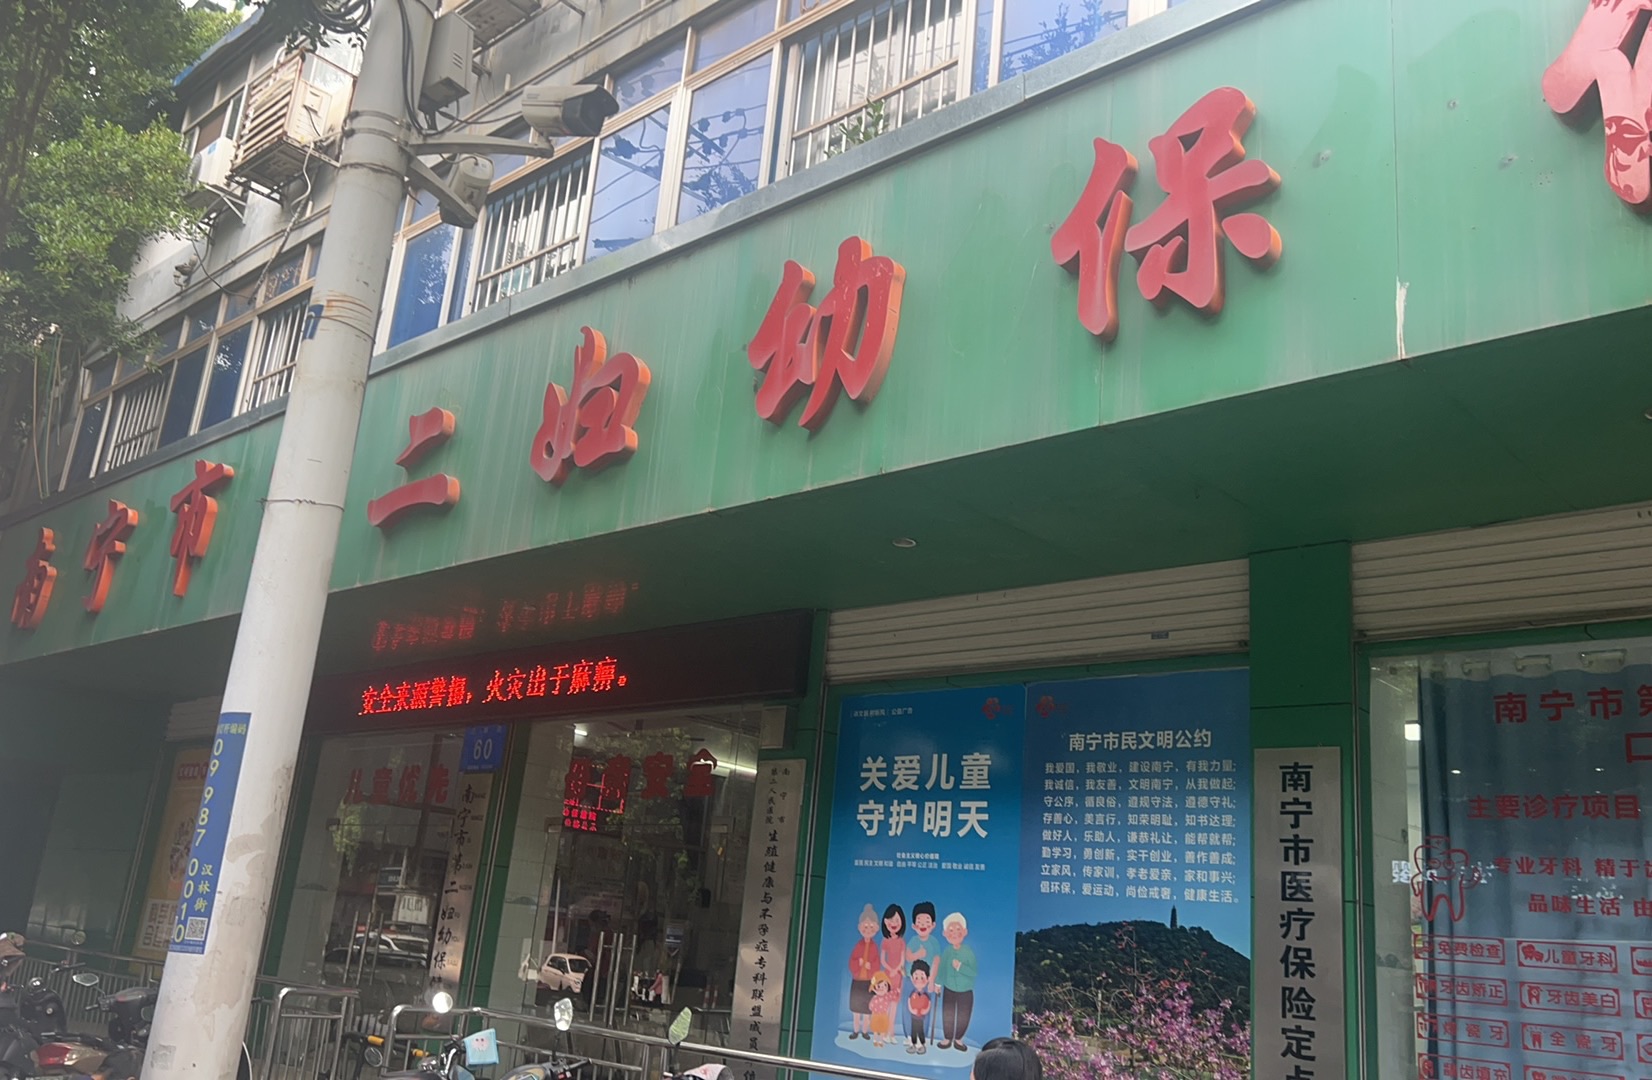 GK-2型号儿童三度白菜网站
出卖到广西南宁第二妇幼保健院